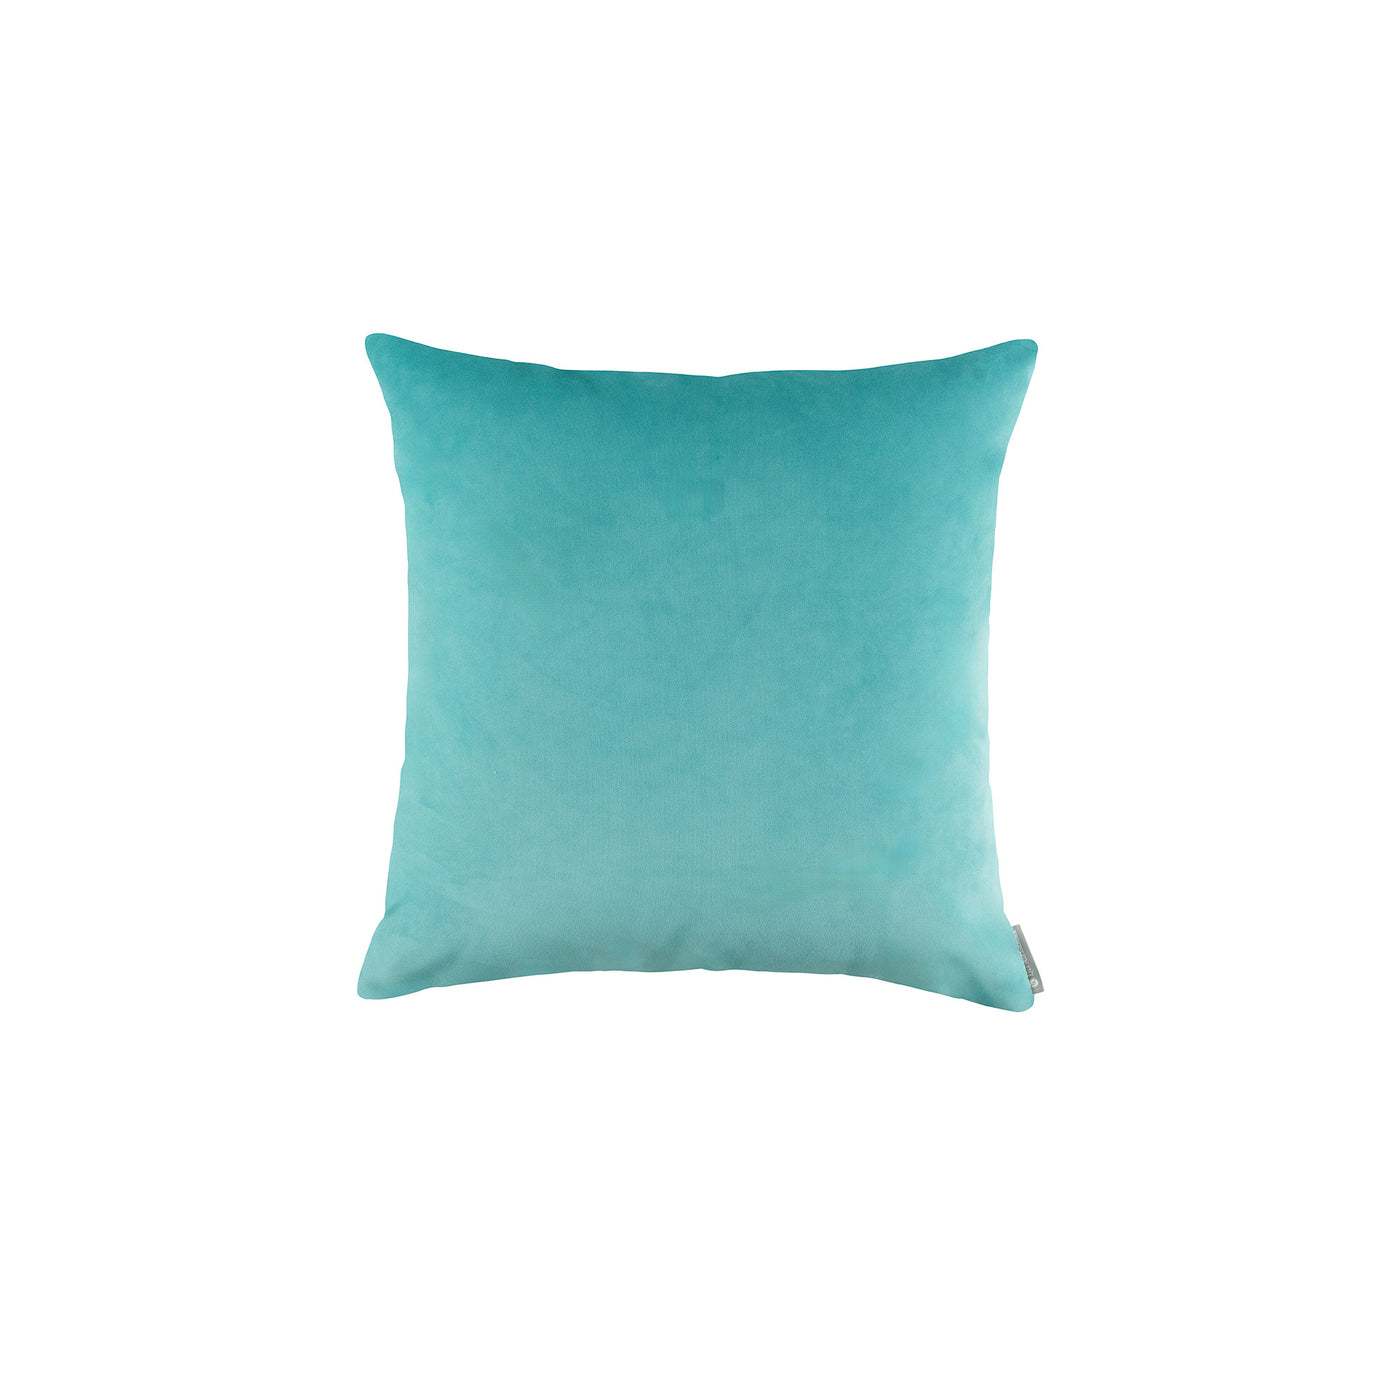 Vivid Bluebox Medium Square Pillow (24x24)